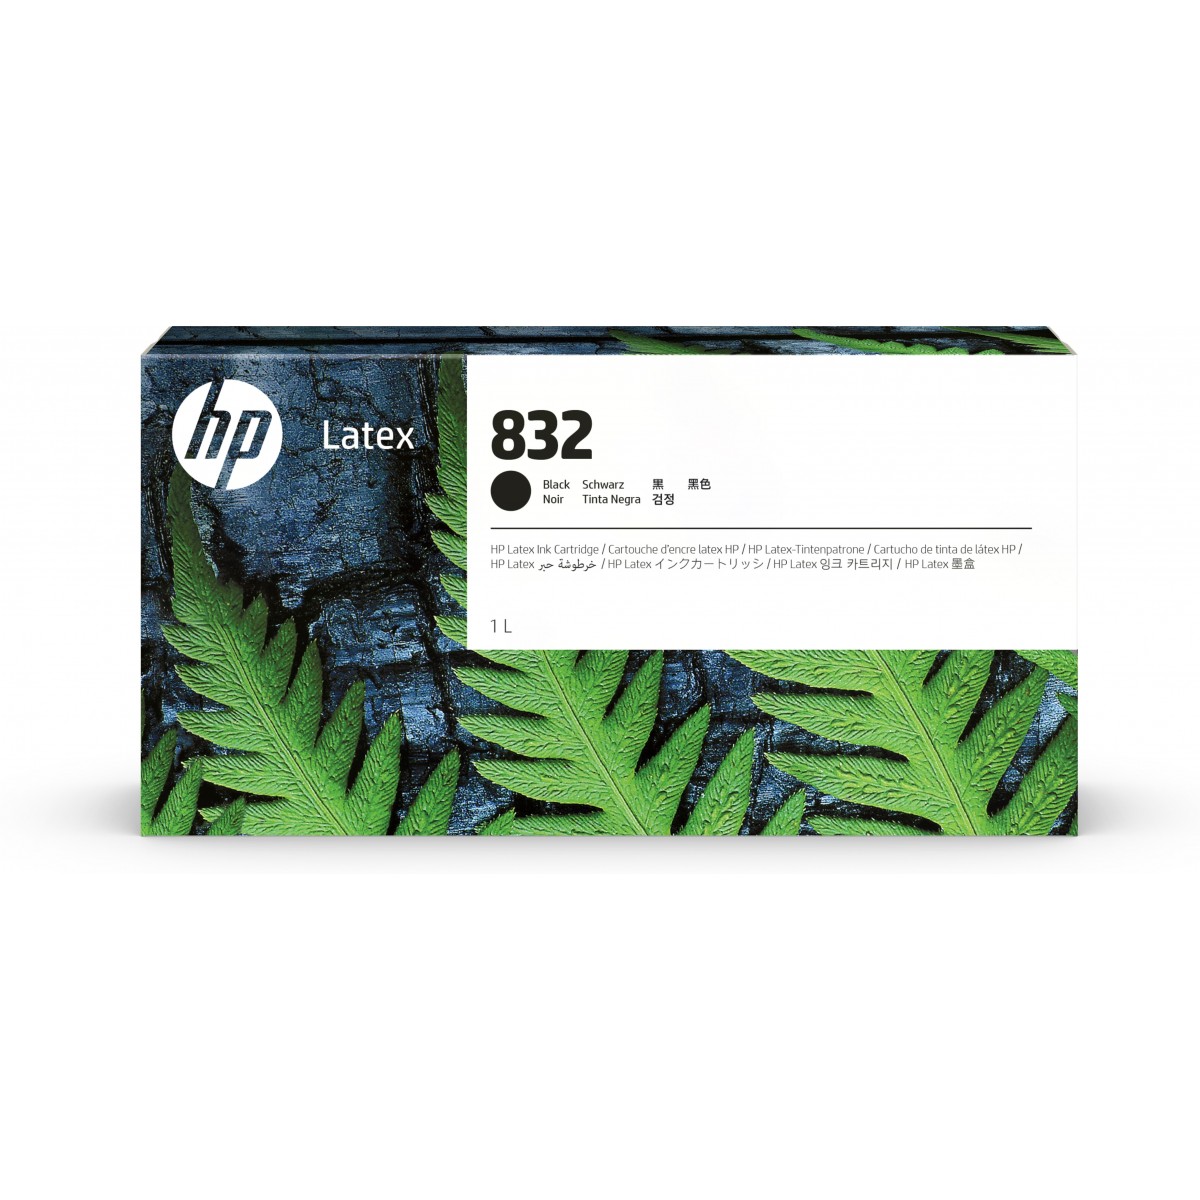 HP 832 - Original - Latex - Black - HP - Single pack - HP Latex 700 - 700 W - 800 - 800 W Printers